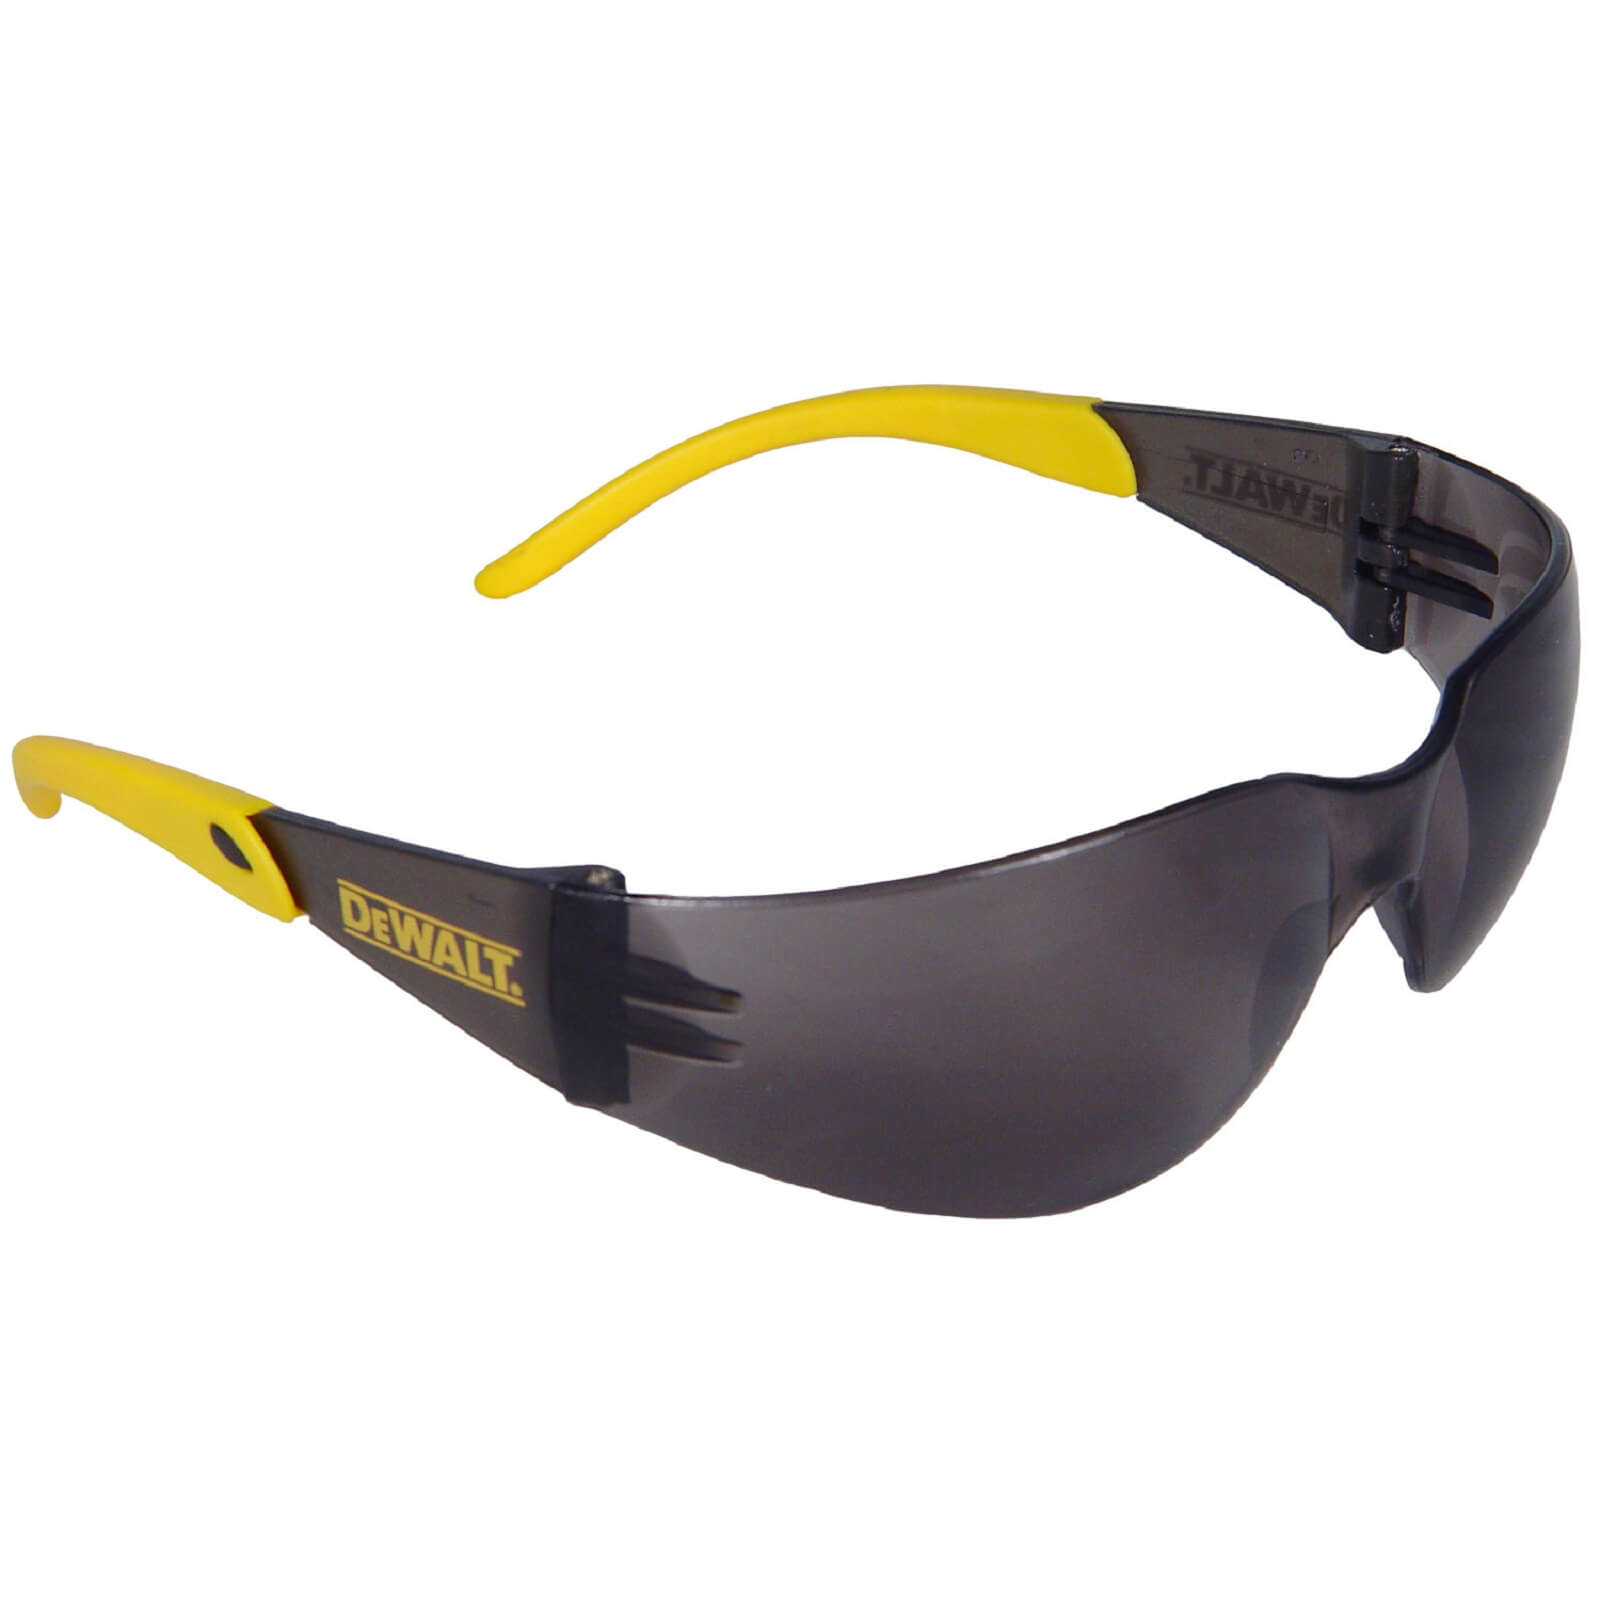 DeWalt DPG54 Protector Safety Glasses - Smoke